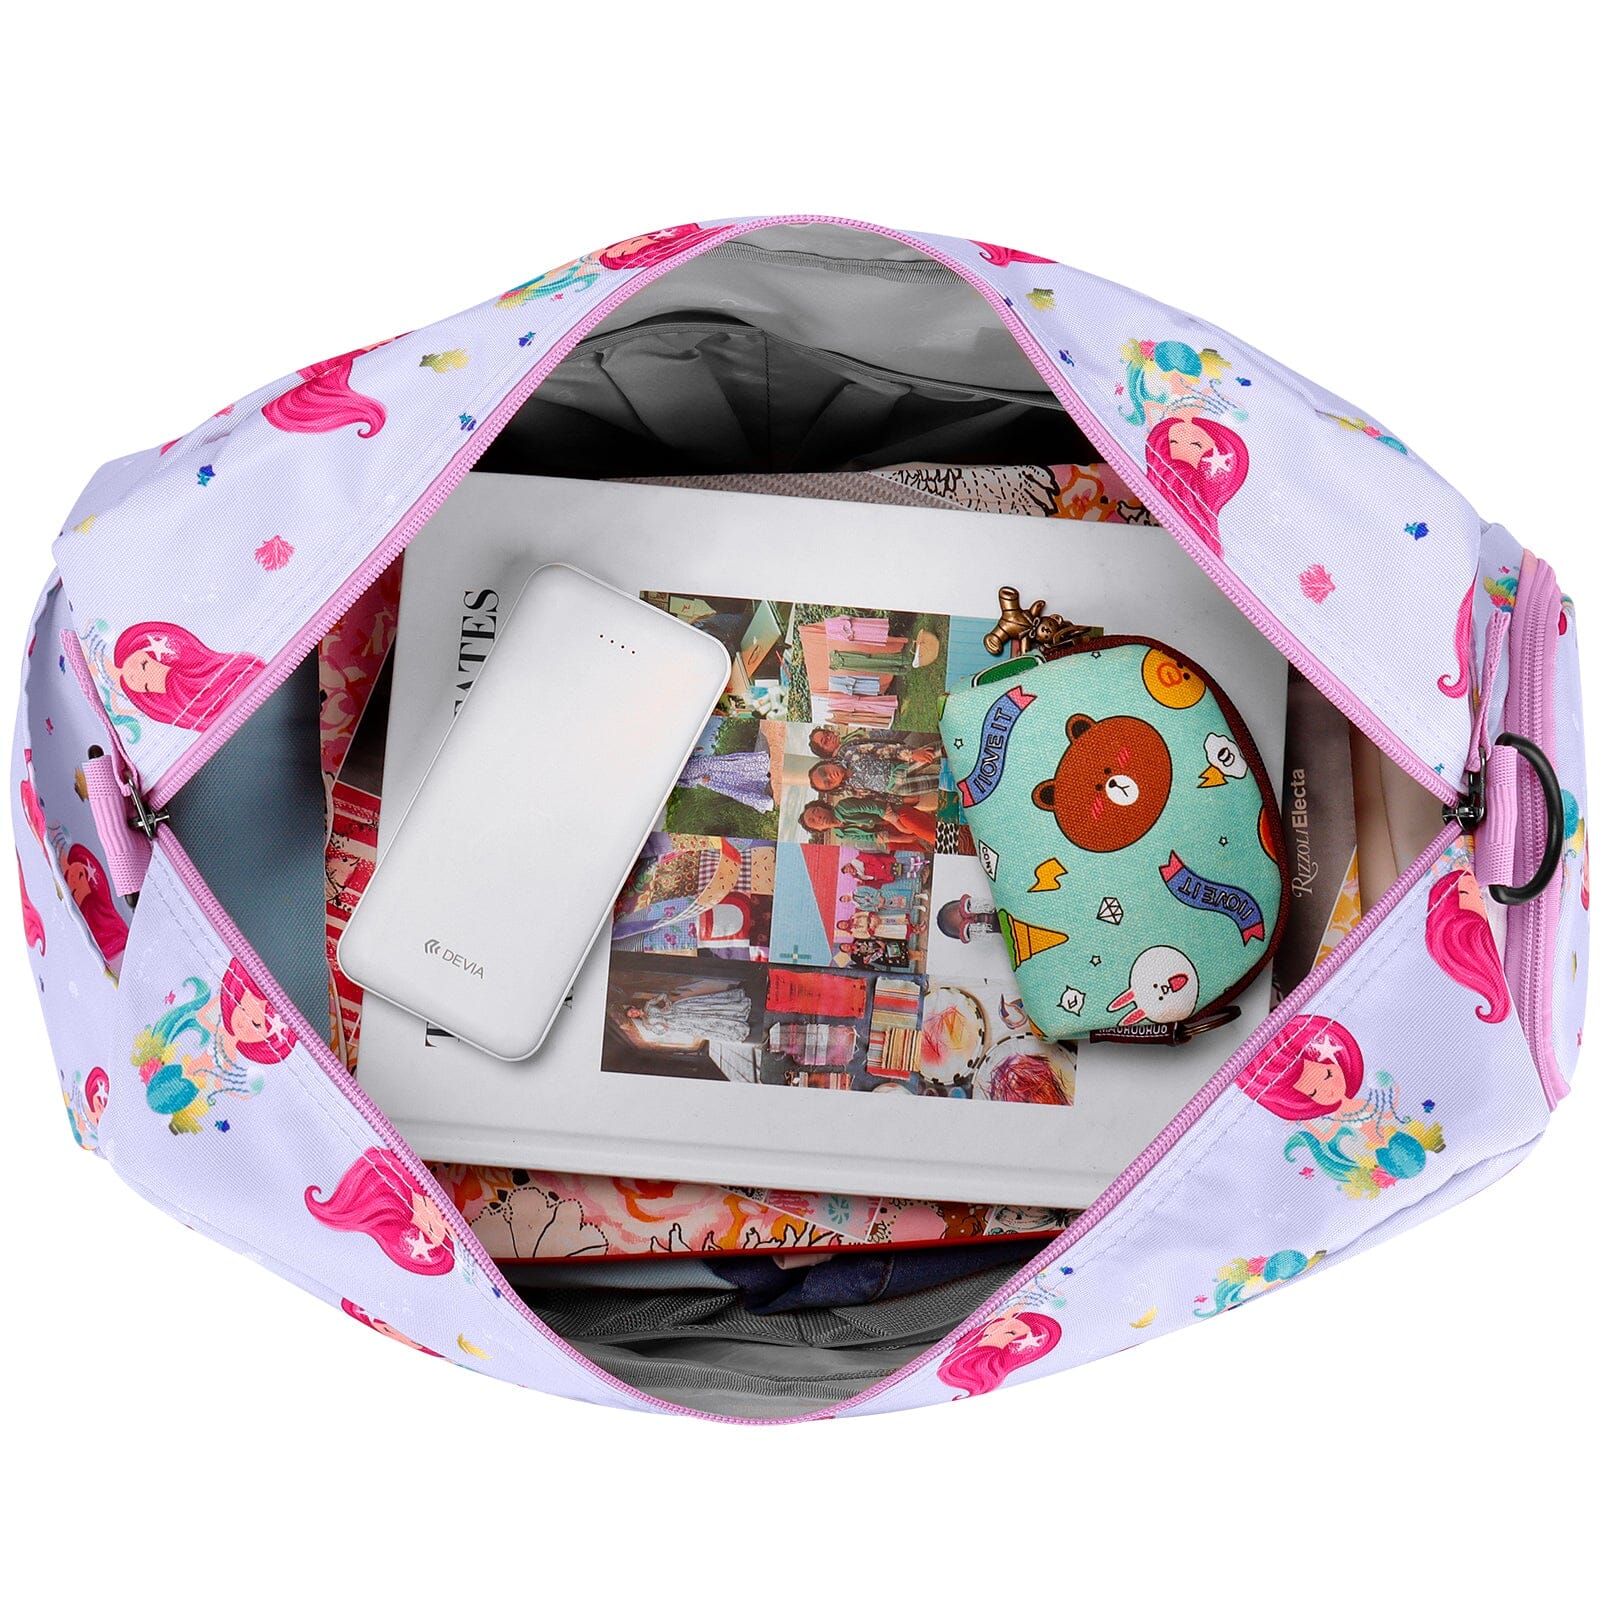 Choco Mocha Kids Pink Duffle Bag for Girls, Kids Mermaid Travel Bag 20.08*9.06*10.63 Inches chocomochakids 